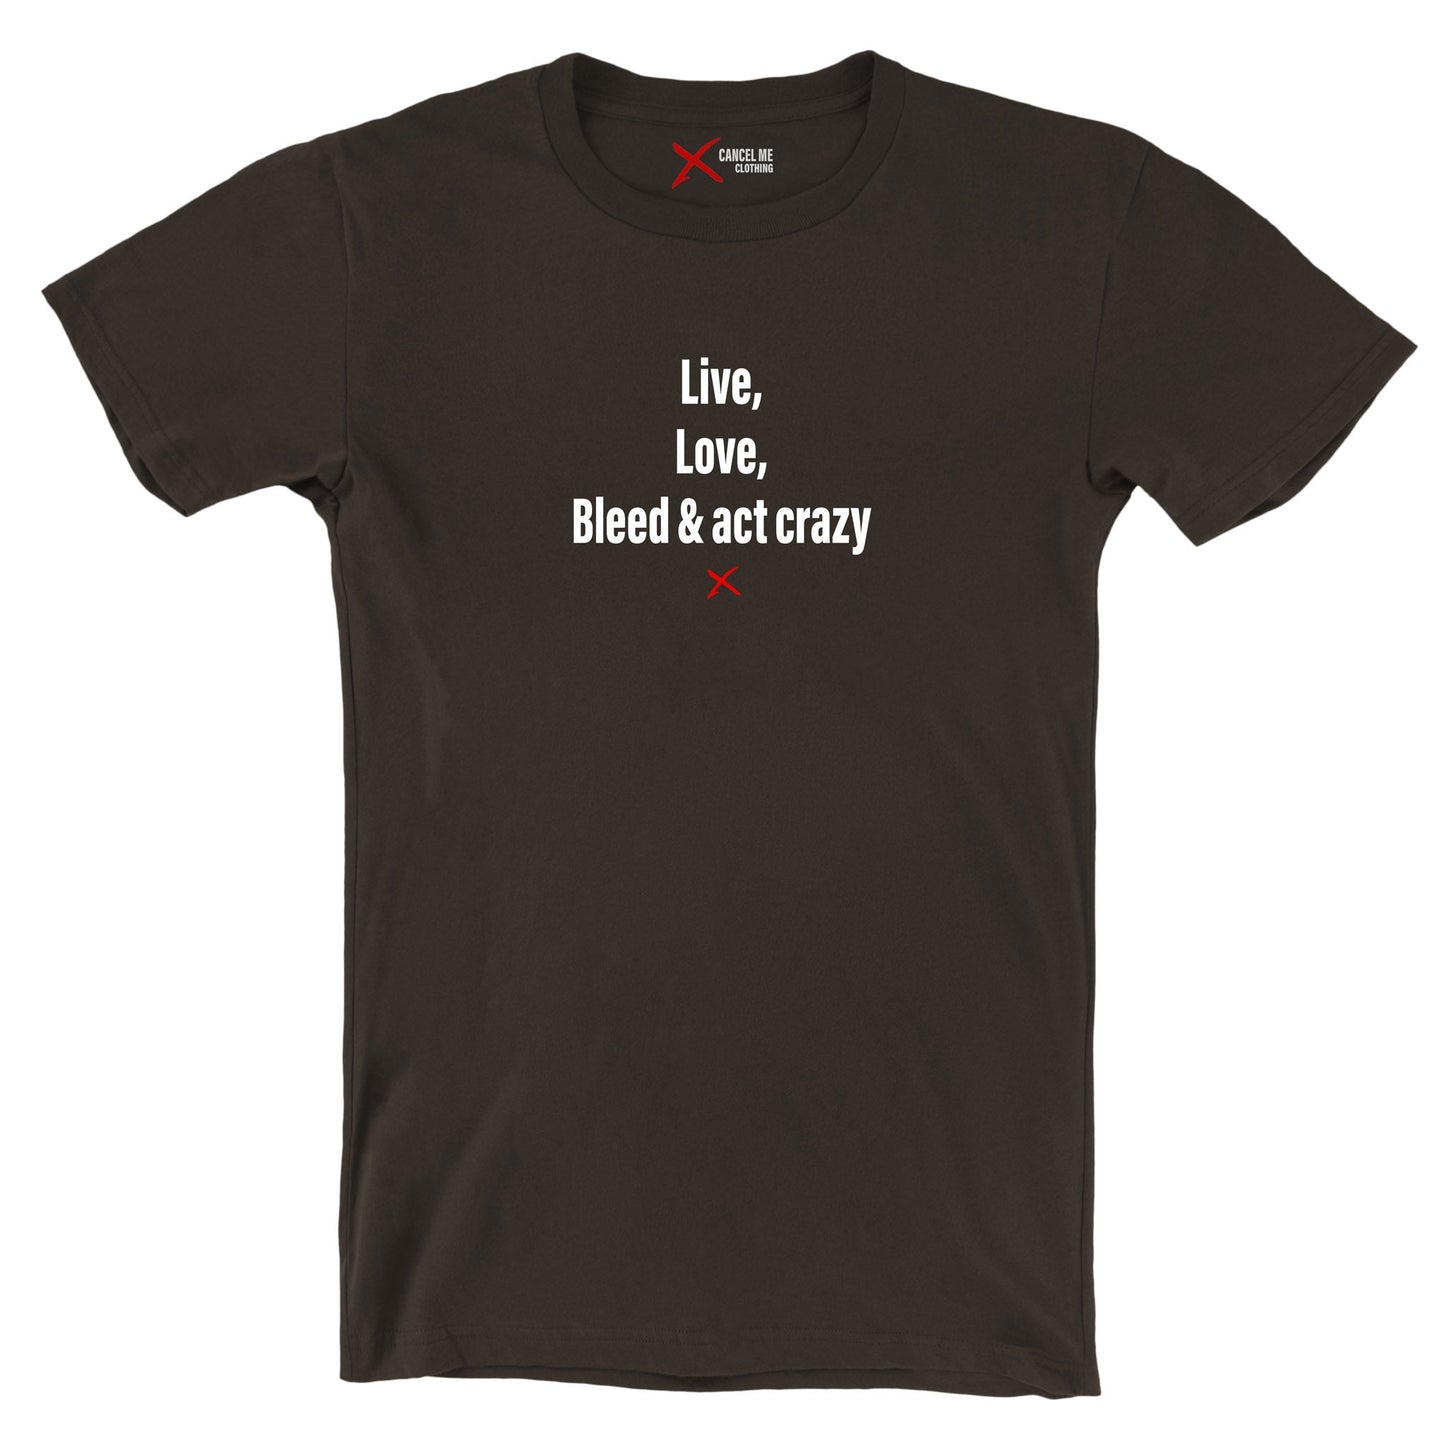 Live, love, bleed & act crazy - Shirt